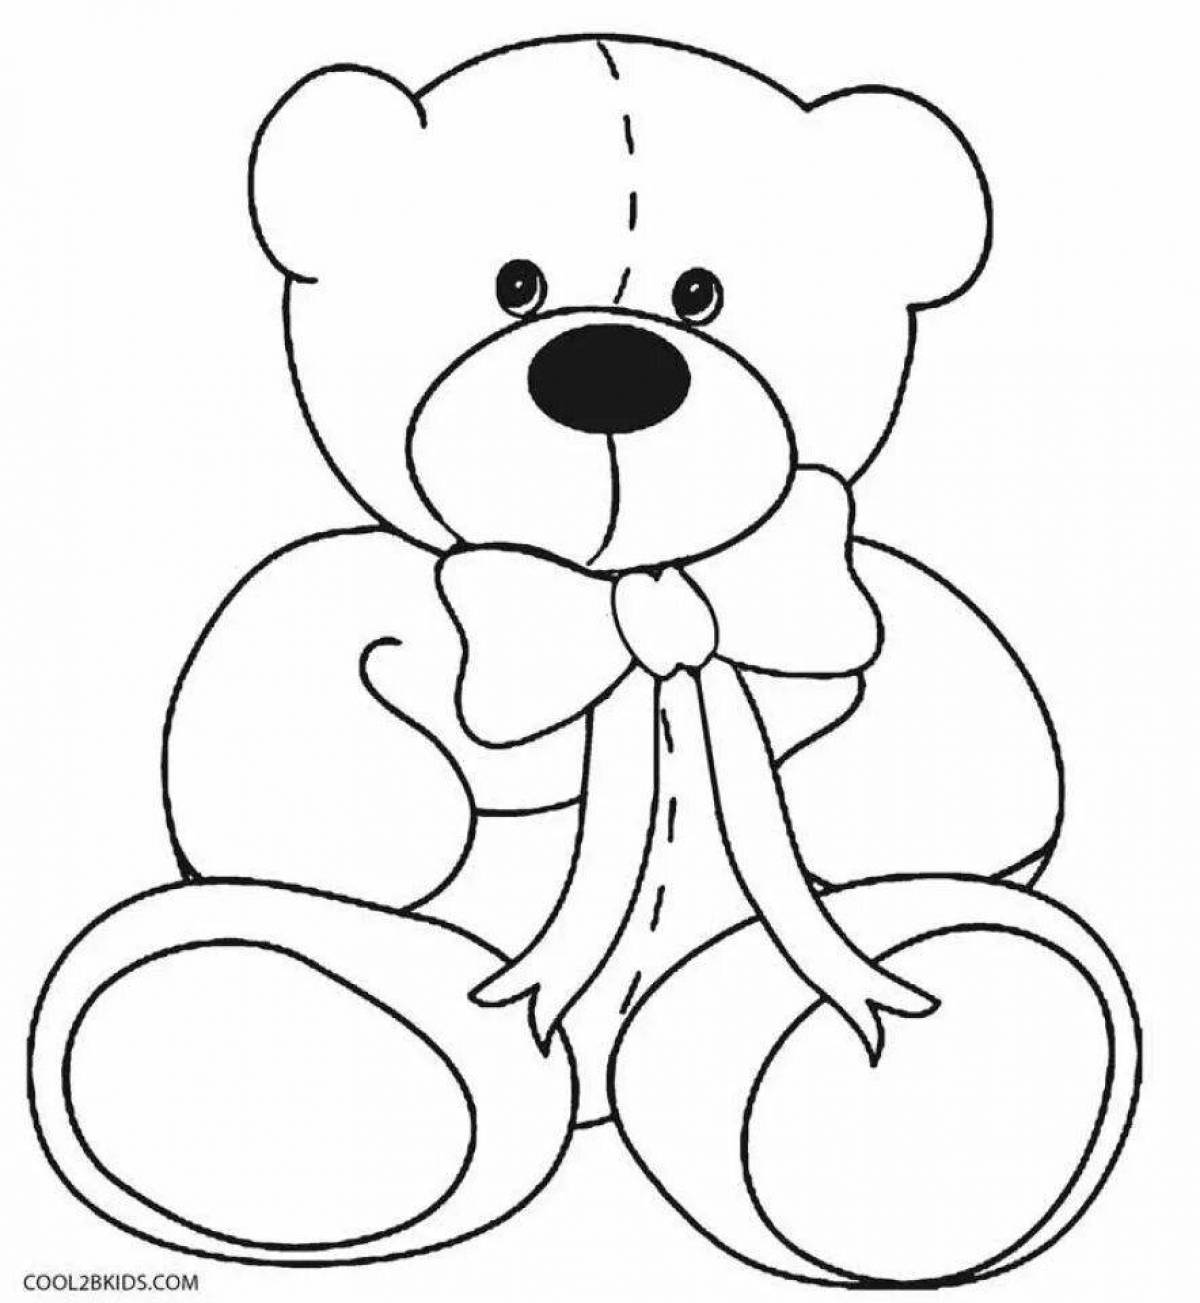 Fun teddy bear coloring for kids